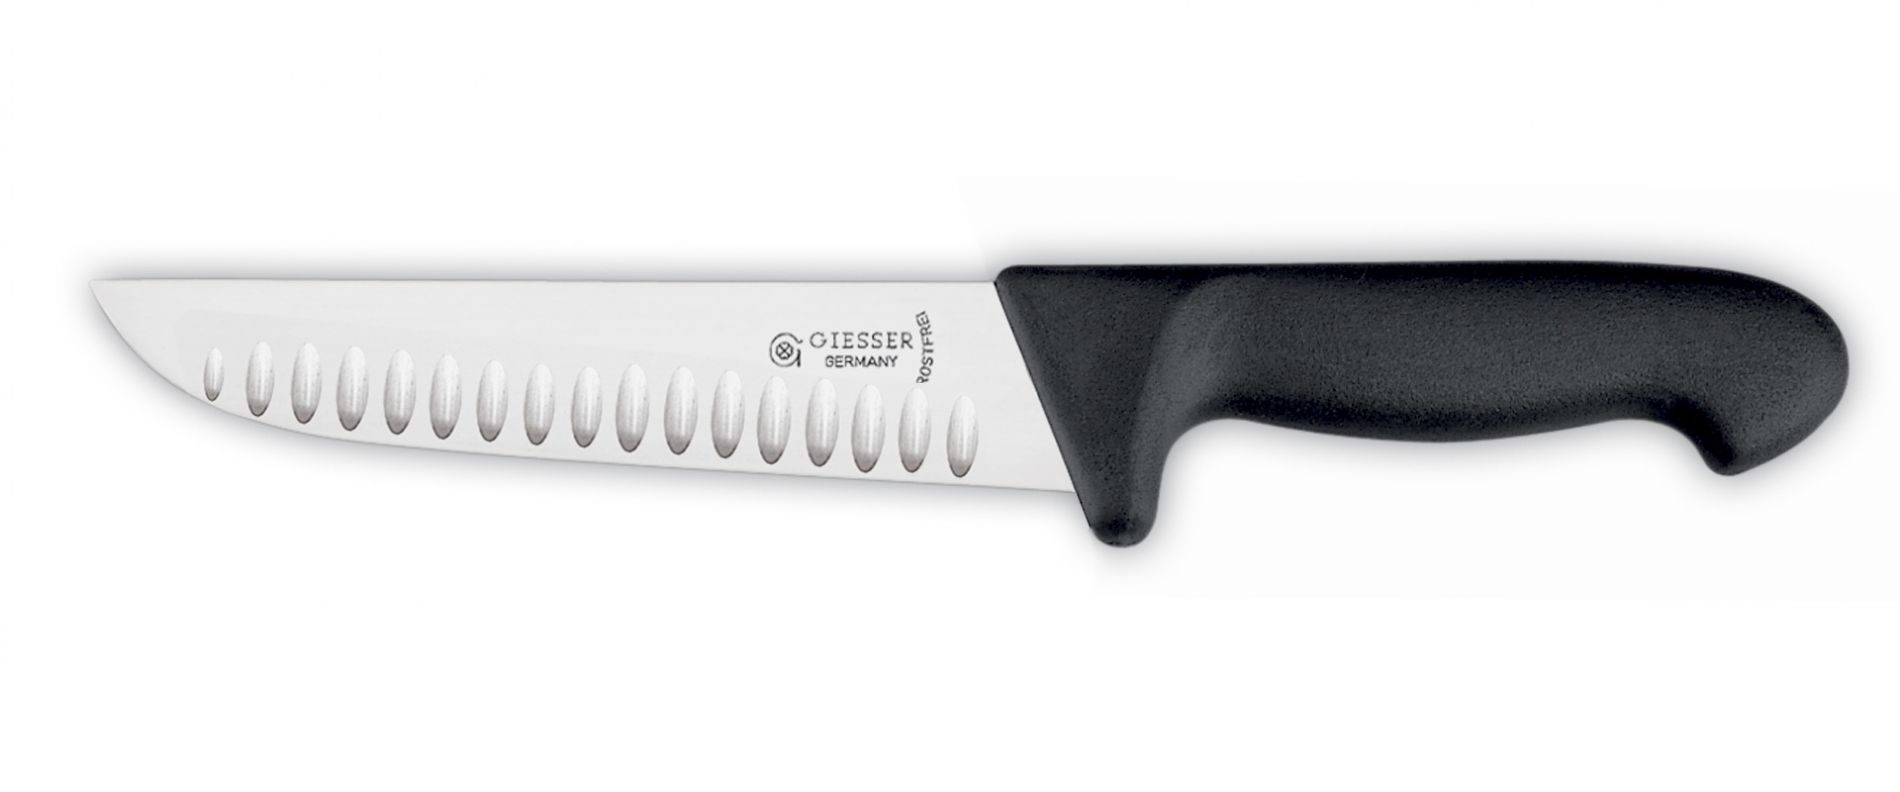 Cuchillo carnicero GIESSER para despiezar, hoja 18cm, ancha, rígida, con alveólos, mango clásico,  negro